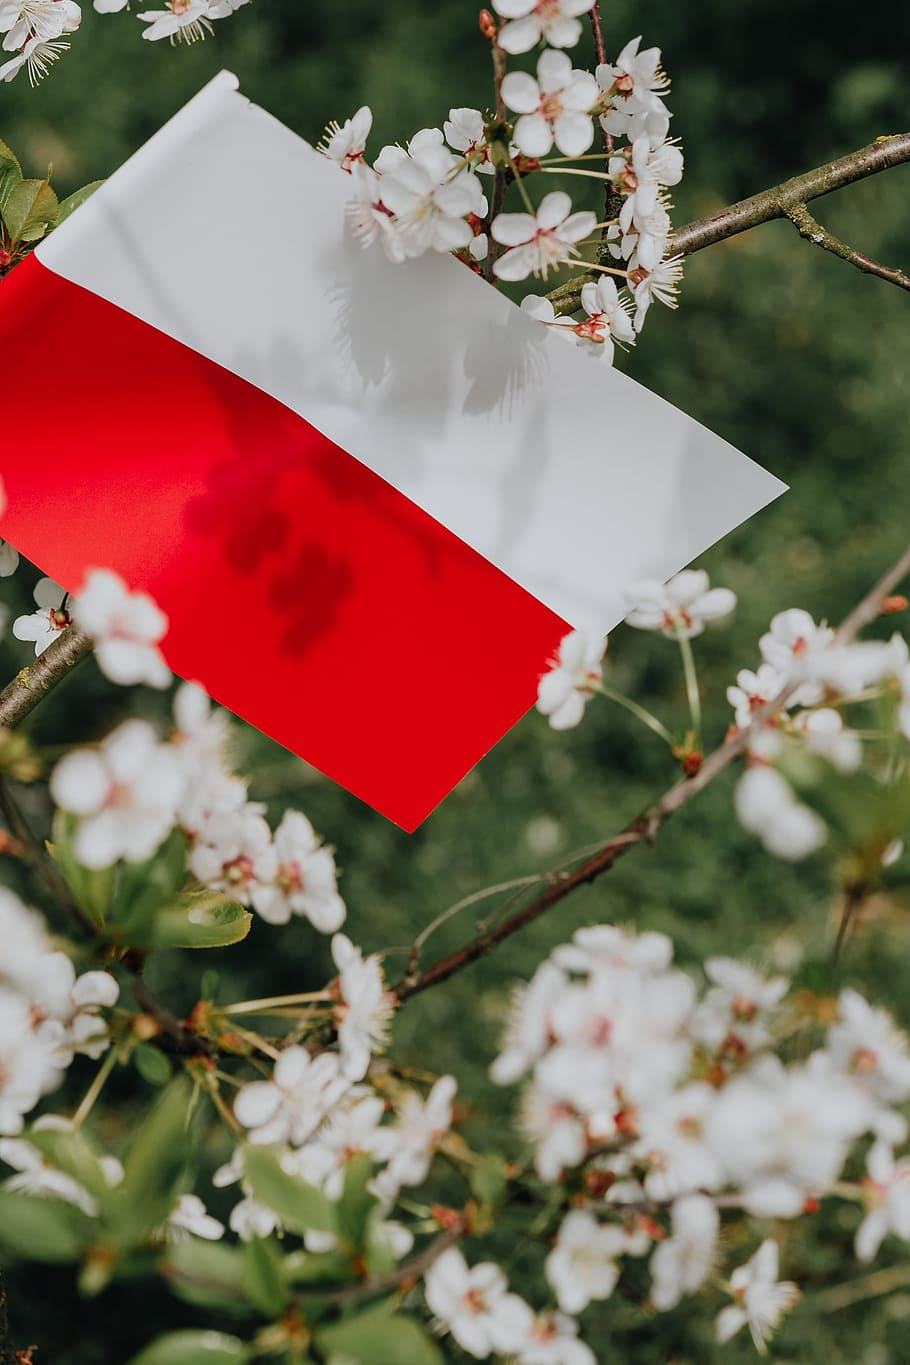 Flag of Poland - Polska Flaga, nature, Europe, tree, polish, national